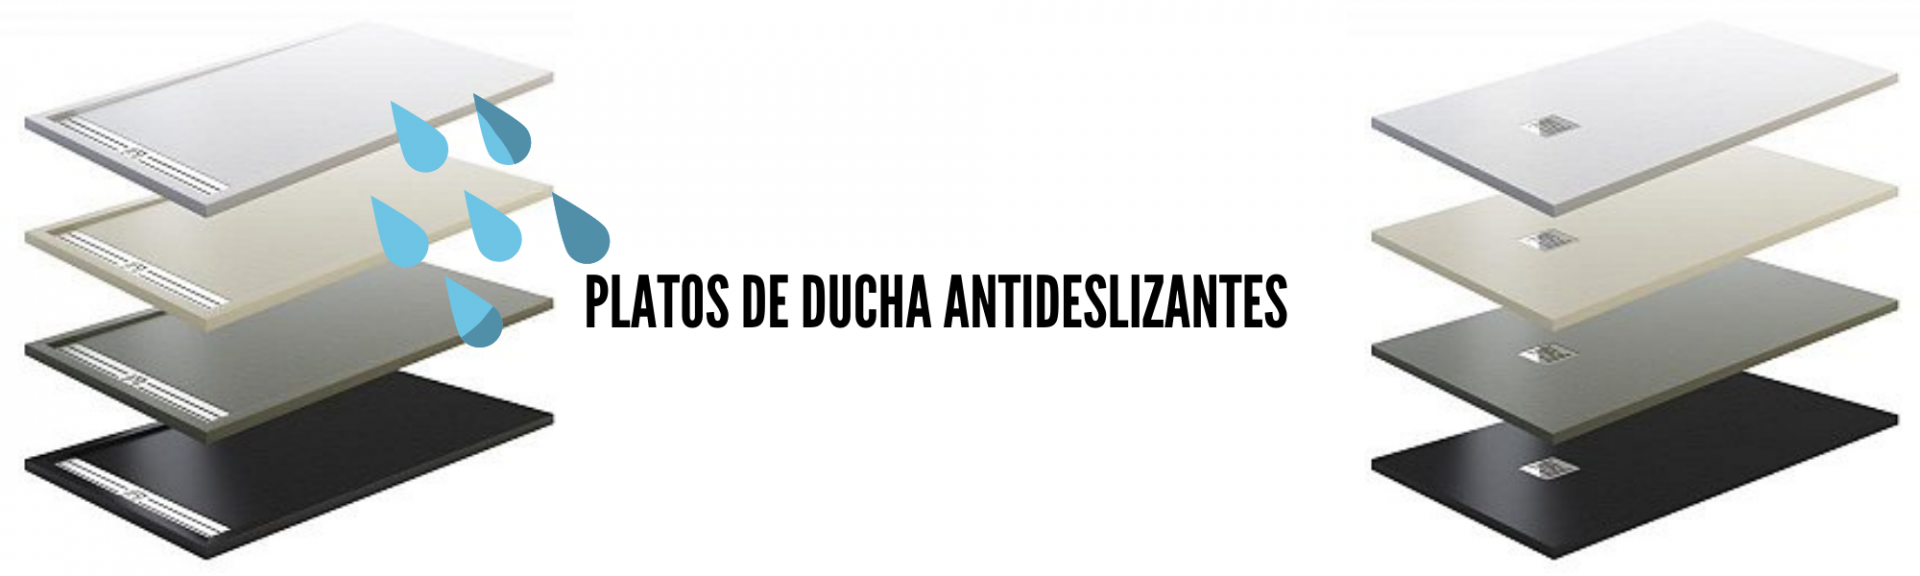 https://cdn.palbincdn.com/users/1935/upload/images/suelo-de-ducha-antideslizante.png